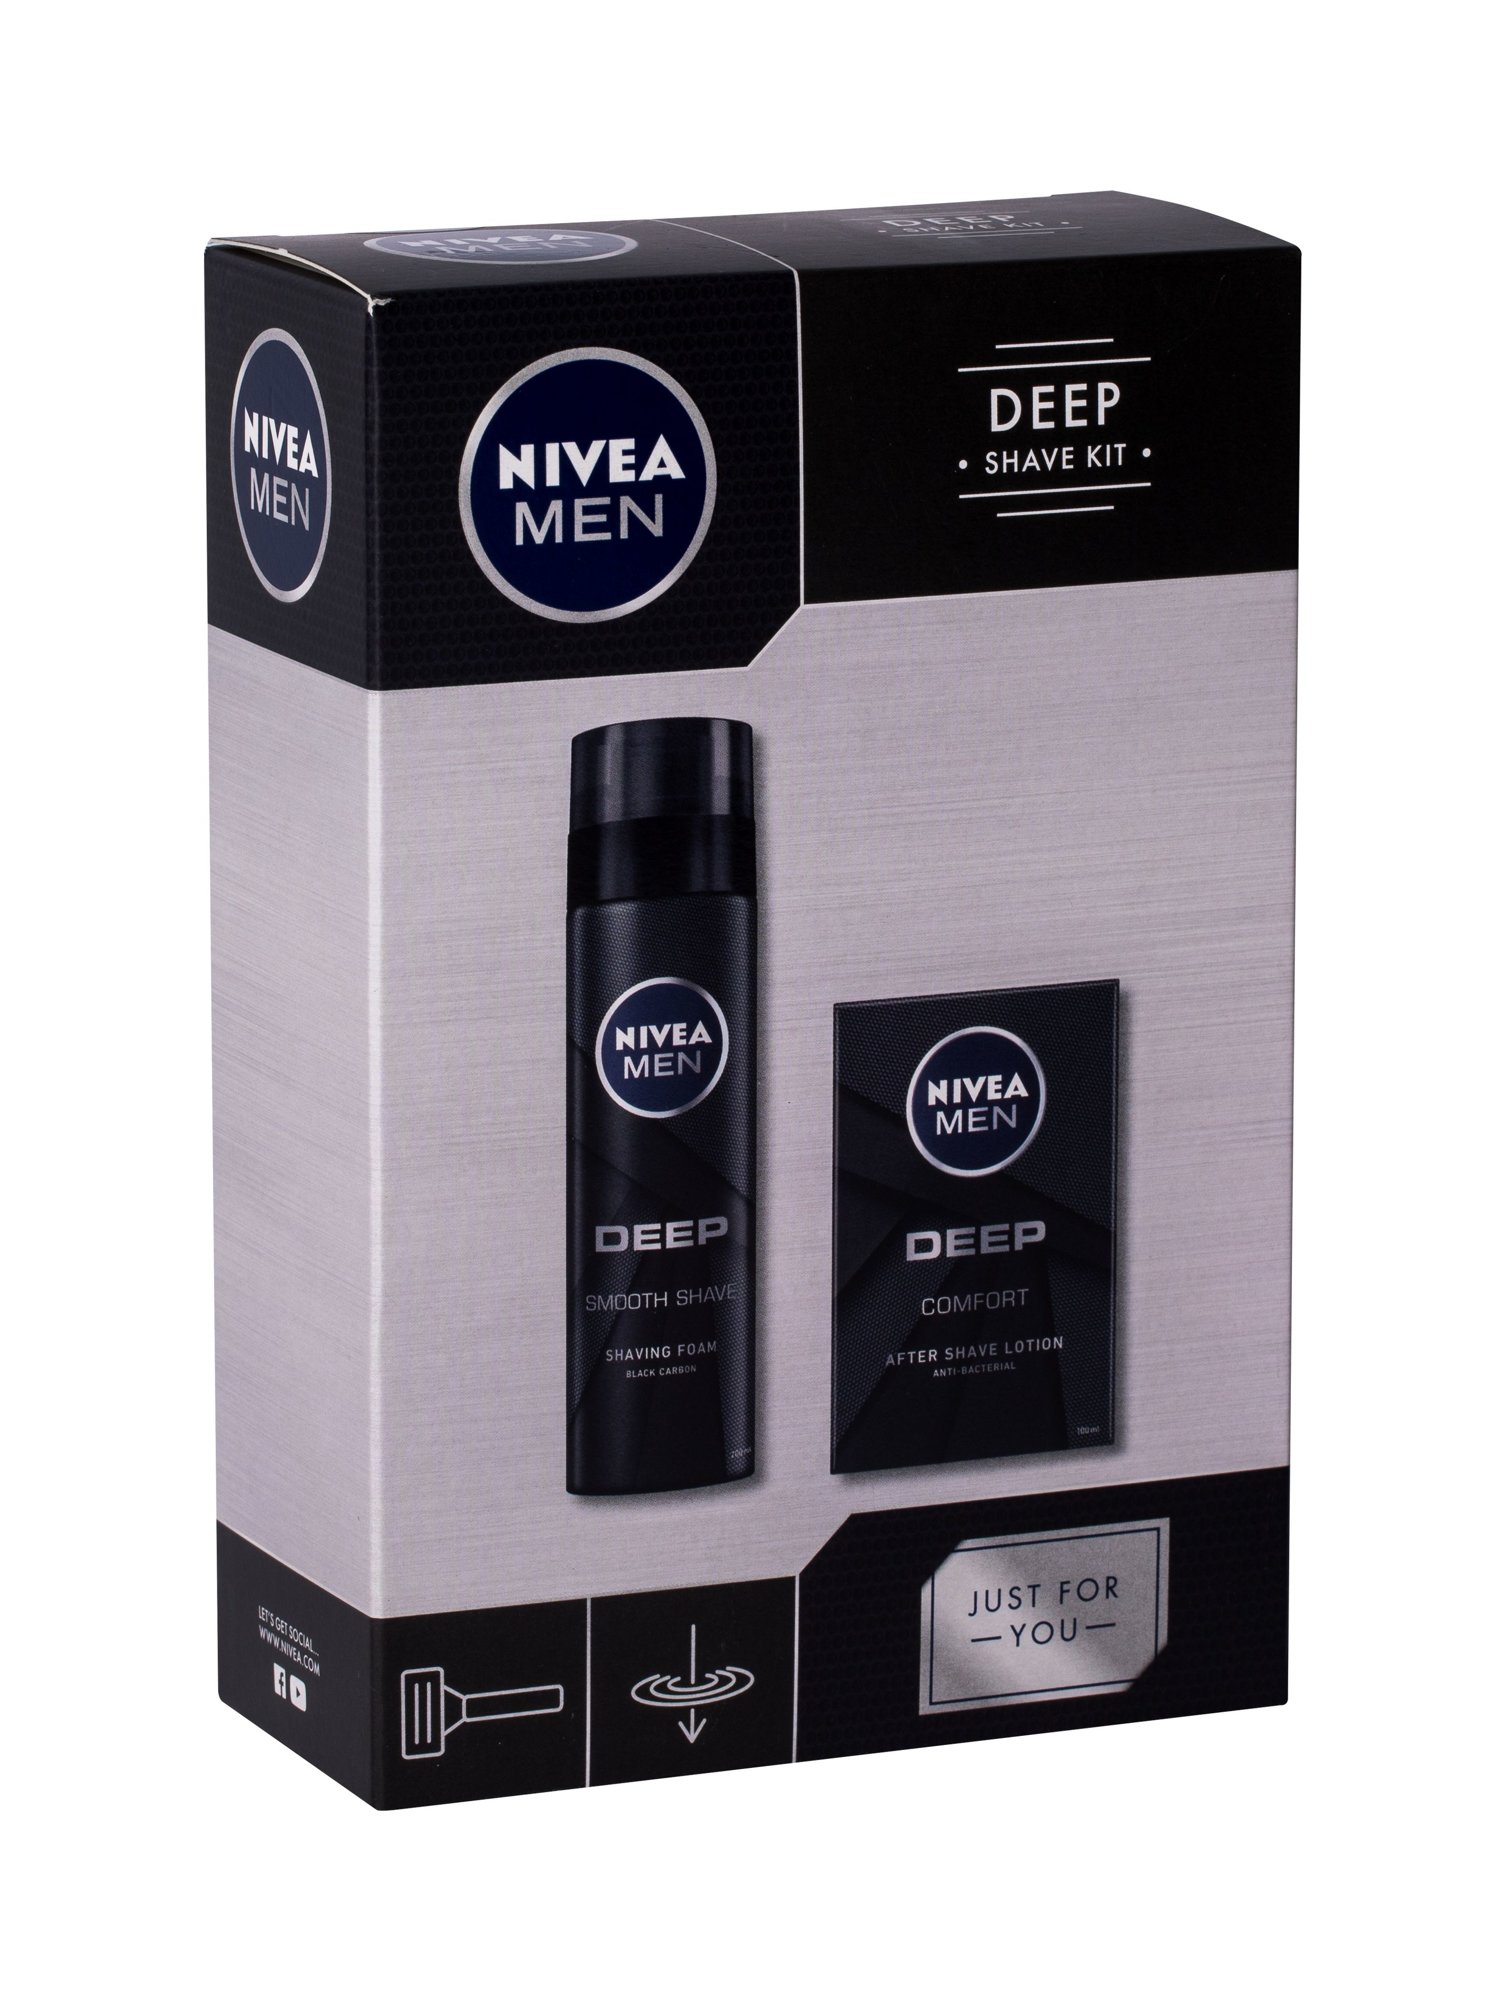 Nivea Men Deep Comfort 100ml Aftershave Lotion 100 ml + Shaving Foam Smooth Shave 200 ml vanduo po skutimosi Rinkinys